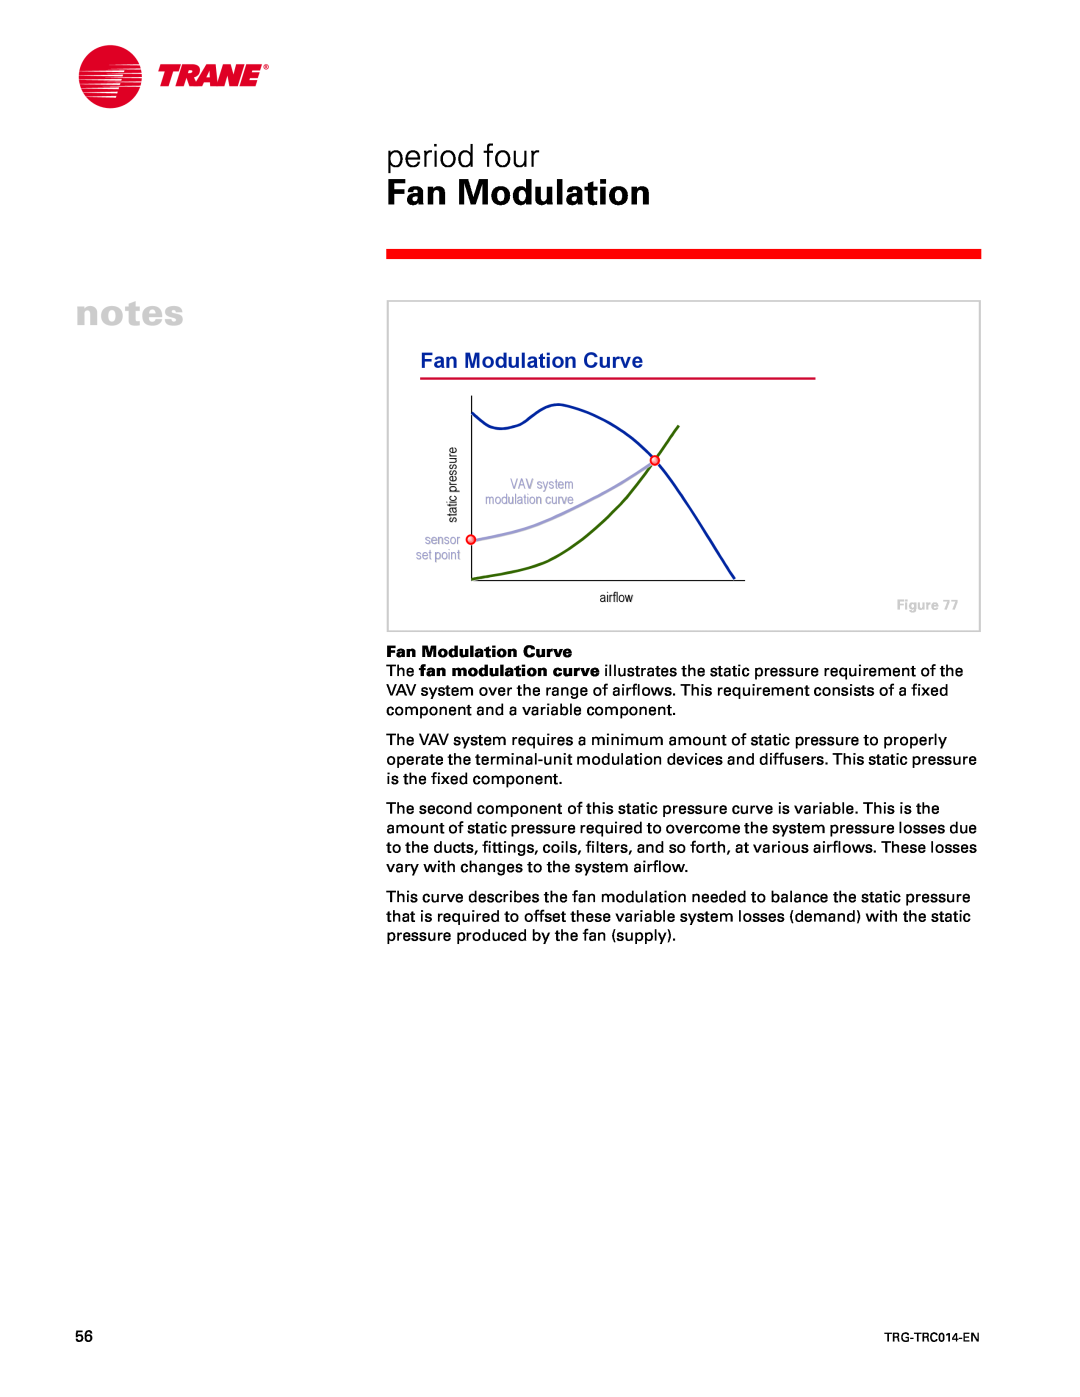 Trane TRG-TRC014-EN manual Fan Modulation Curve, period four 